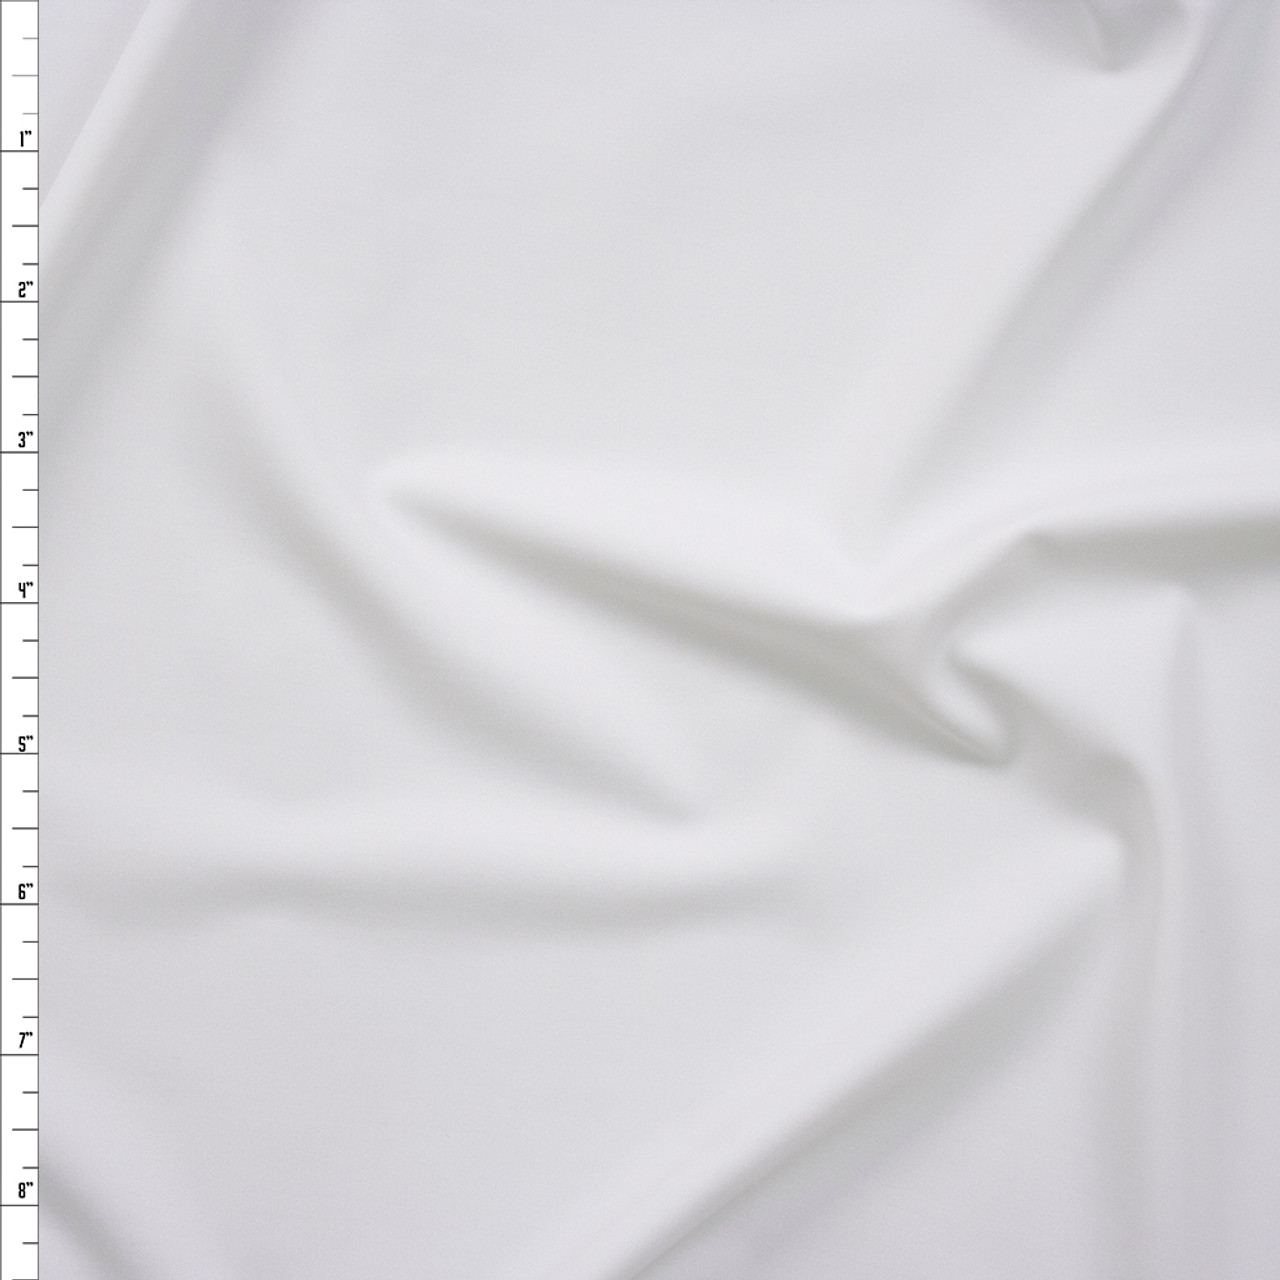 Cali Fabrics White Light Midweight Nylon/Spandex Fabric by the Yard